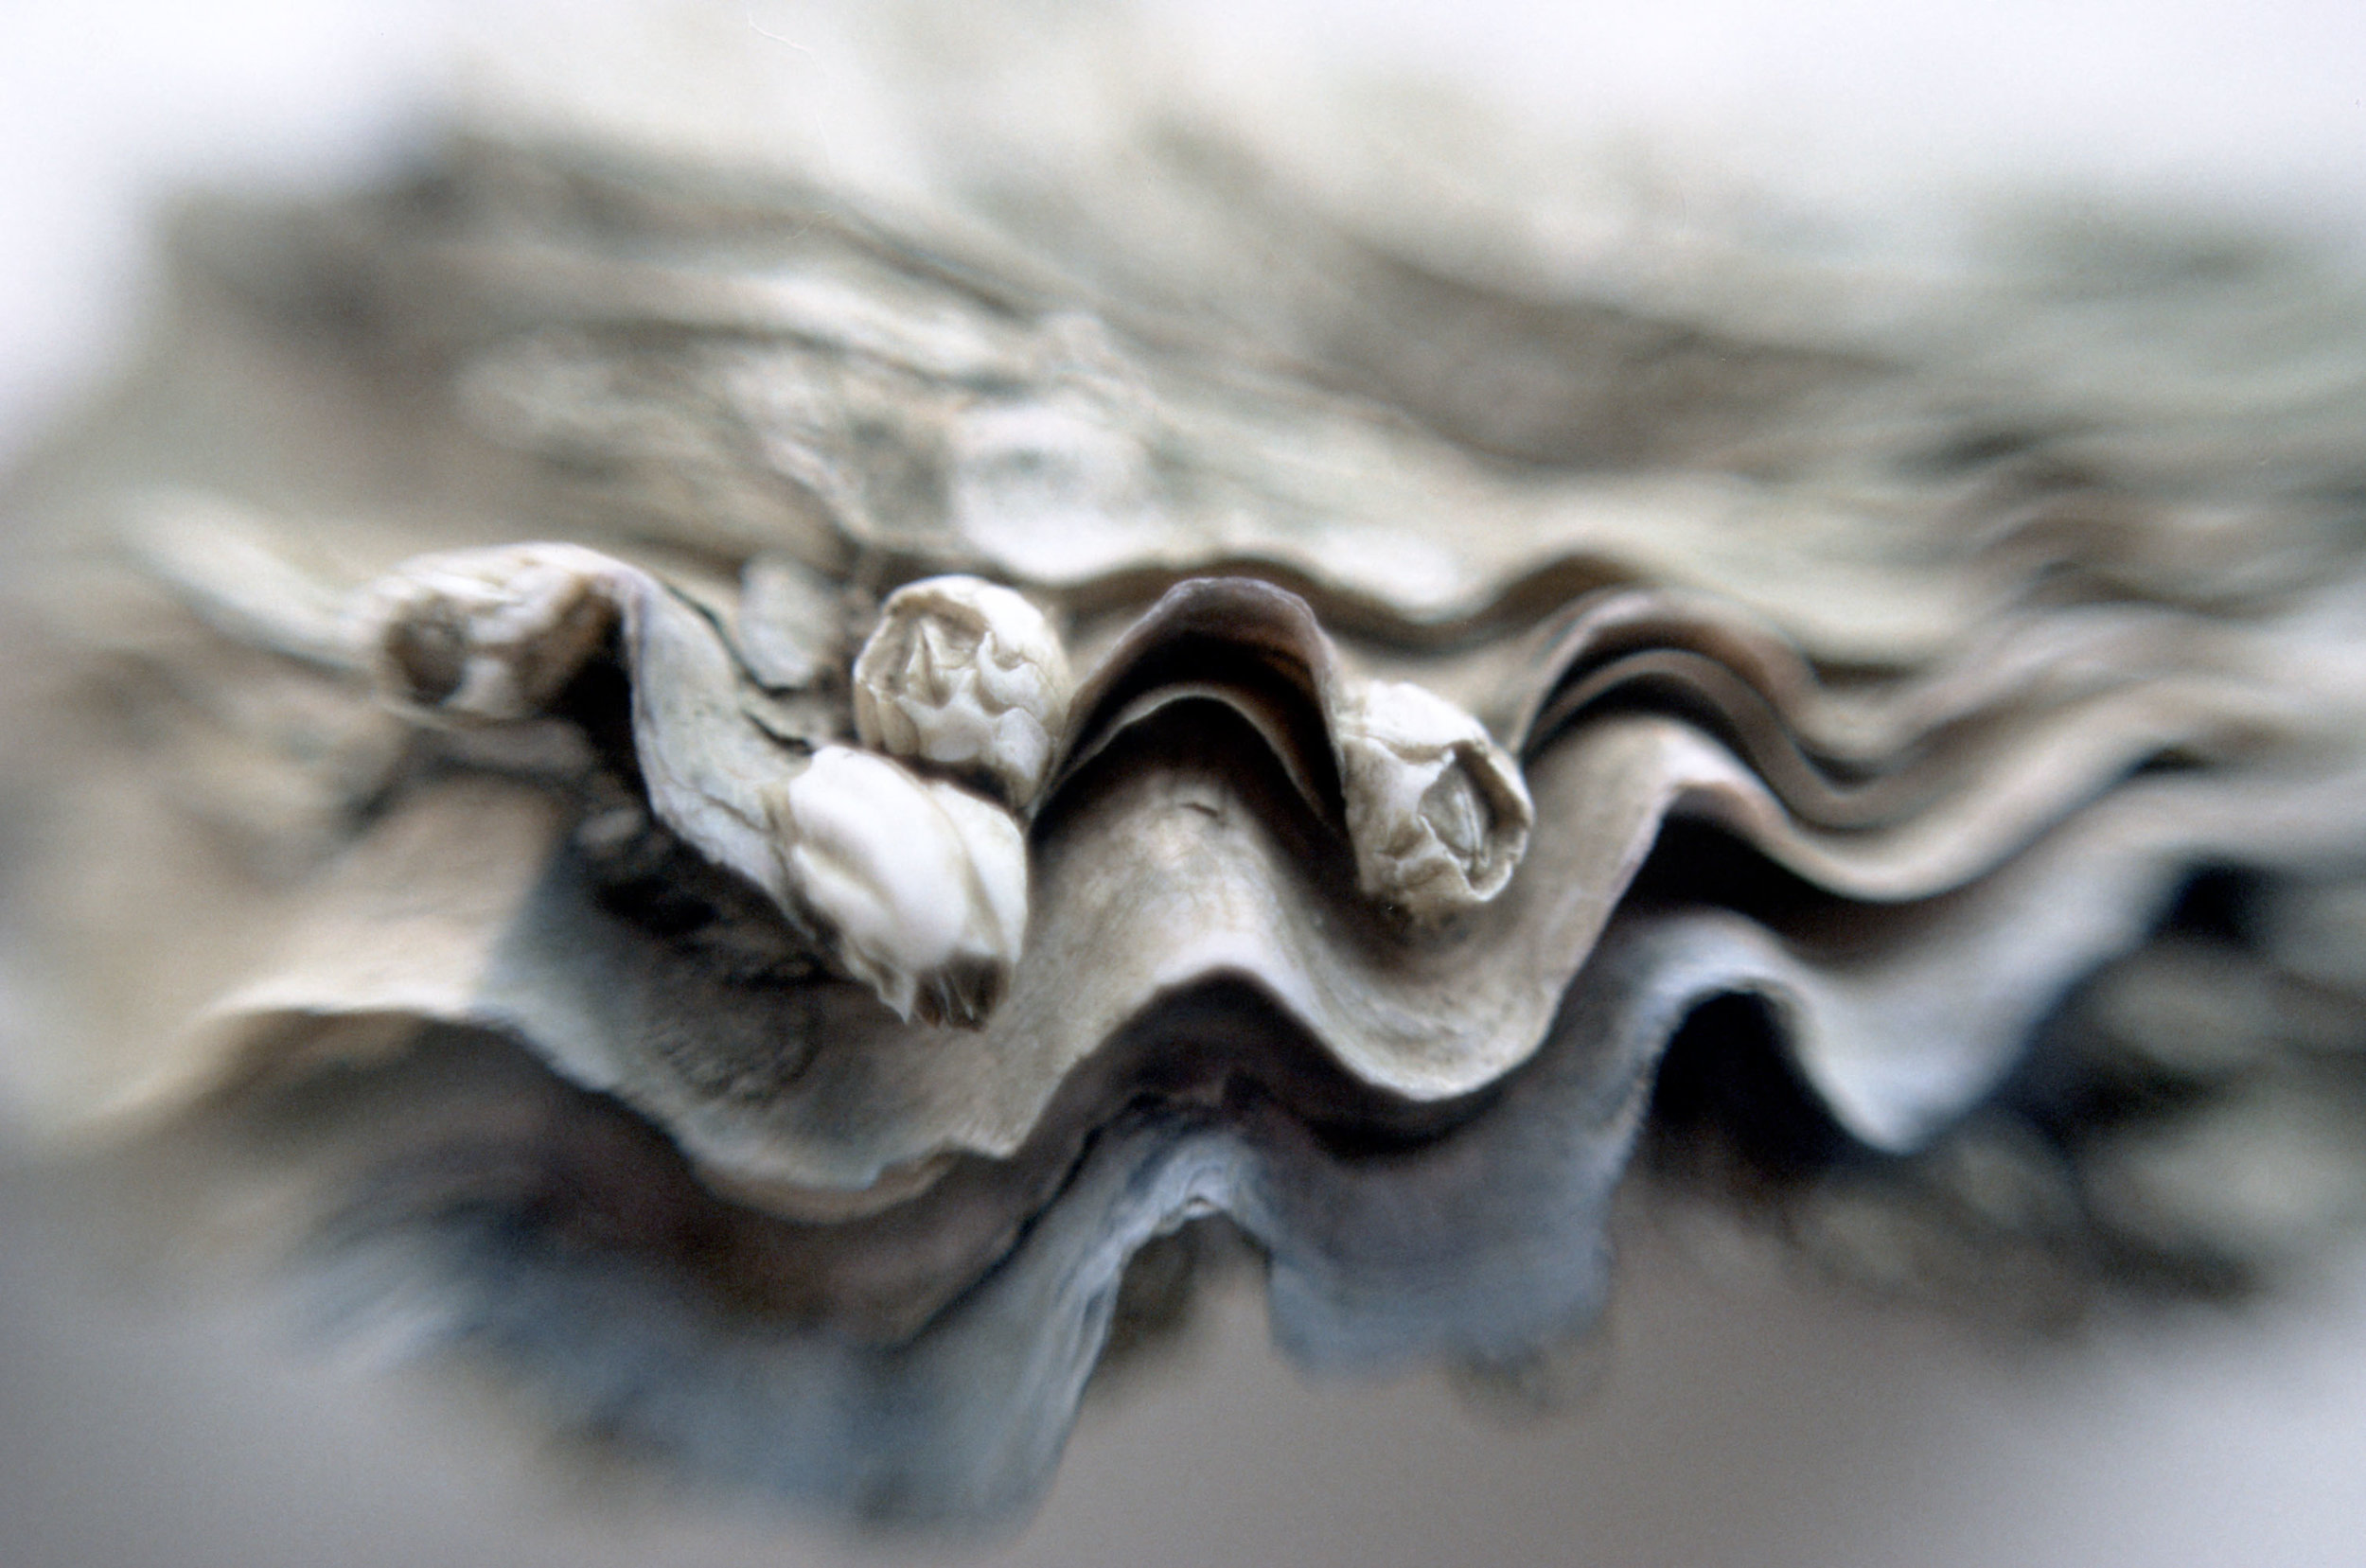  Barnacled oyster shell (ii), 1991 